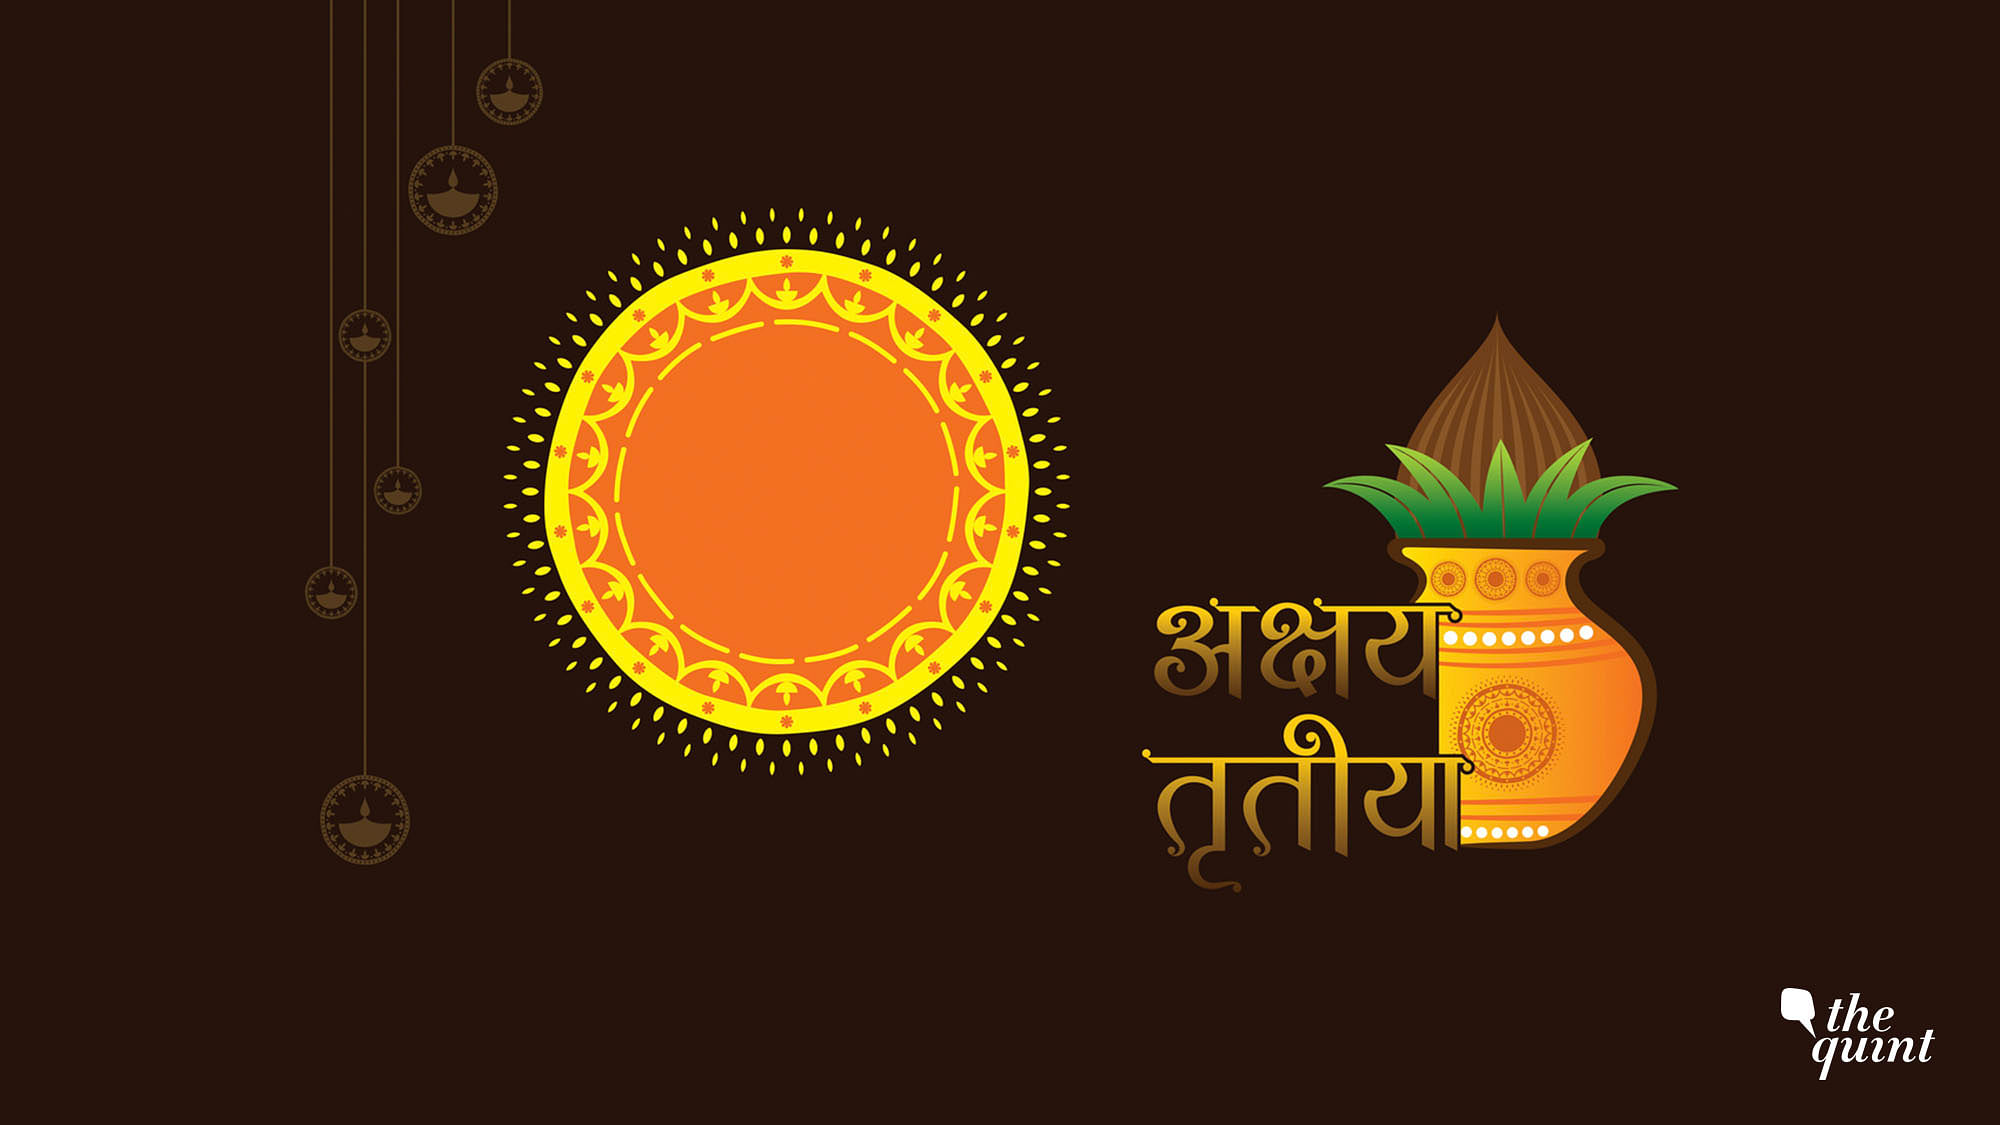 Happy Akshaya Tritiya 2020 wishes, images and messages